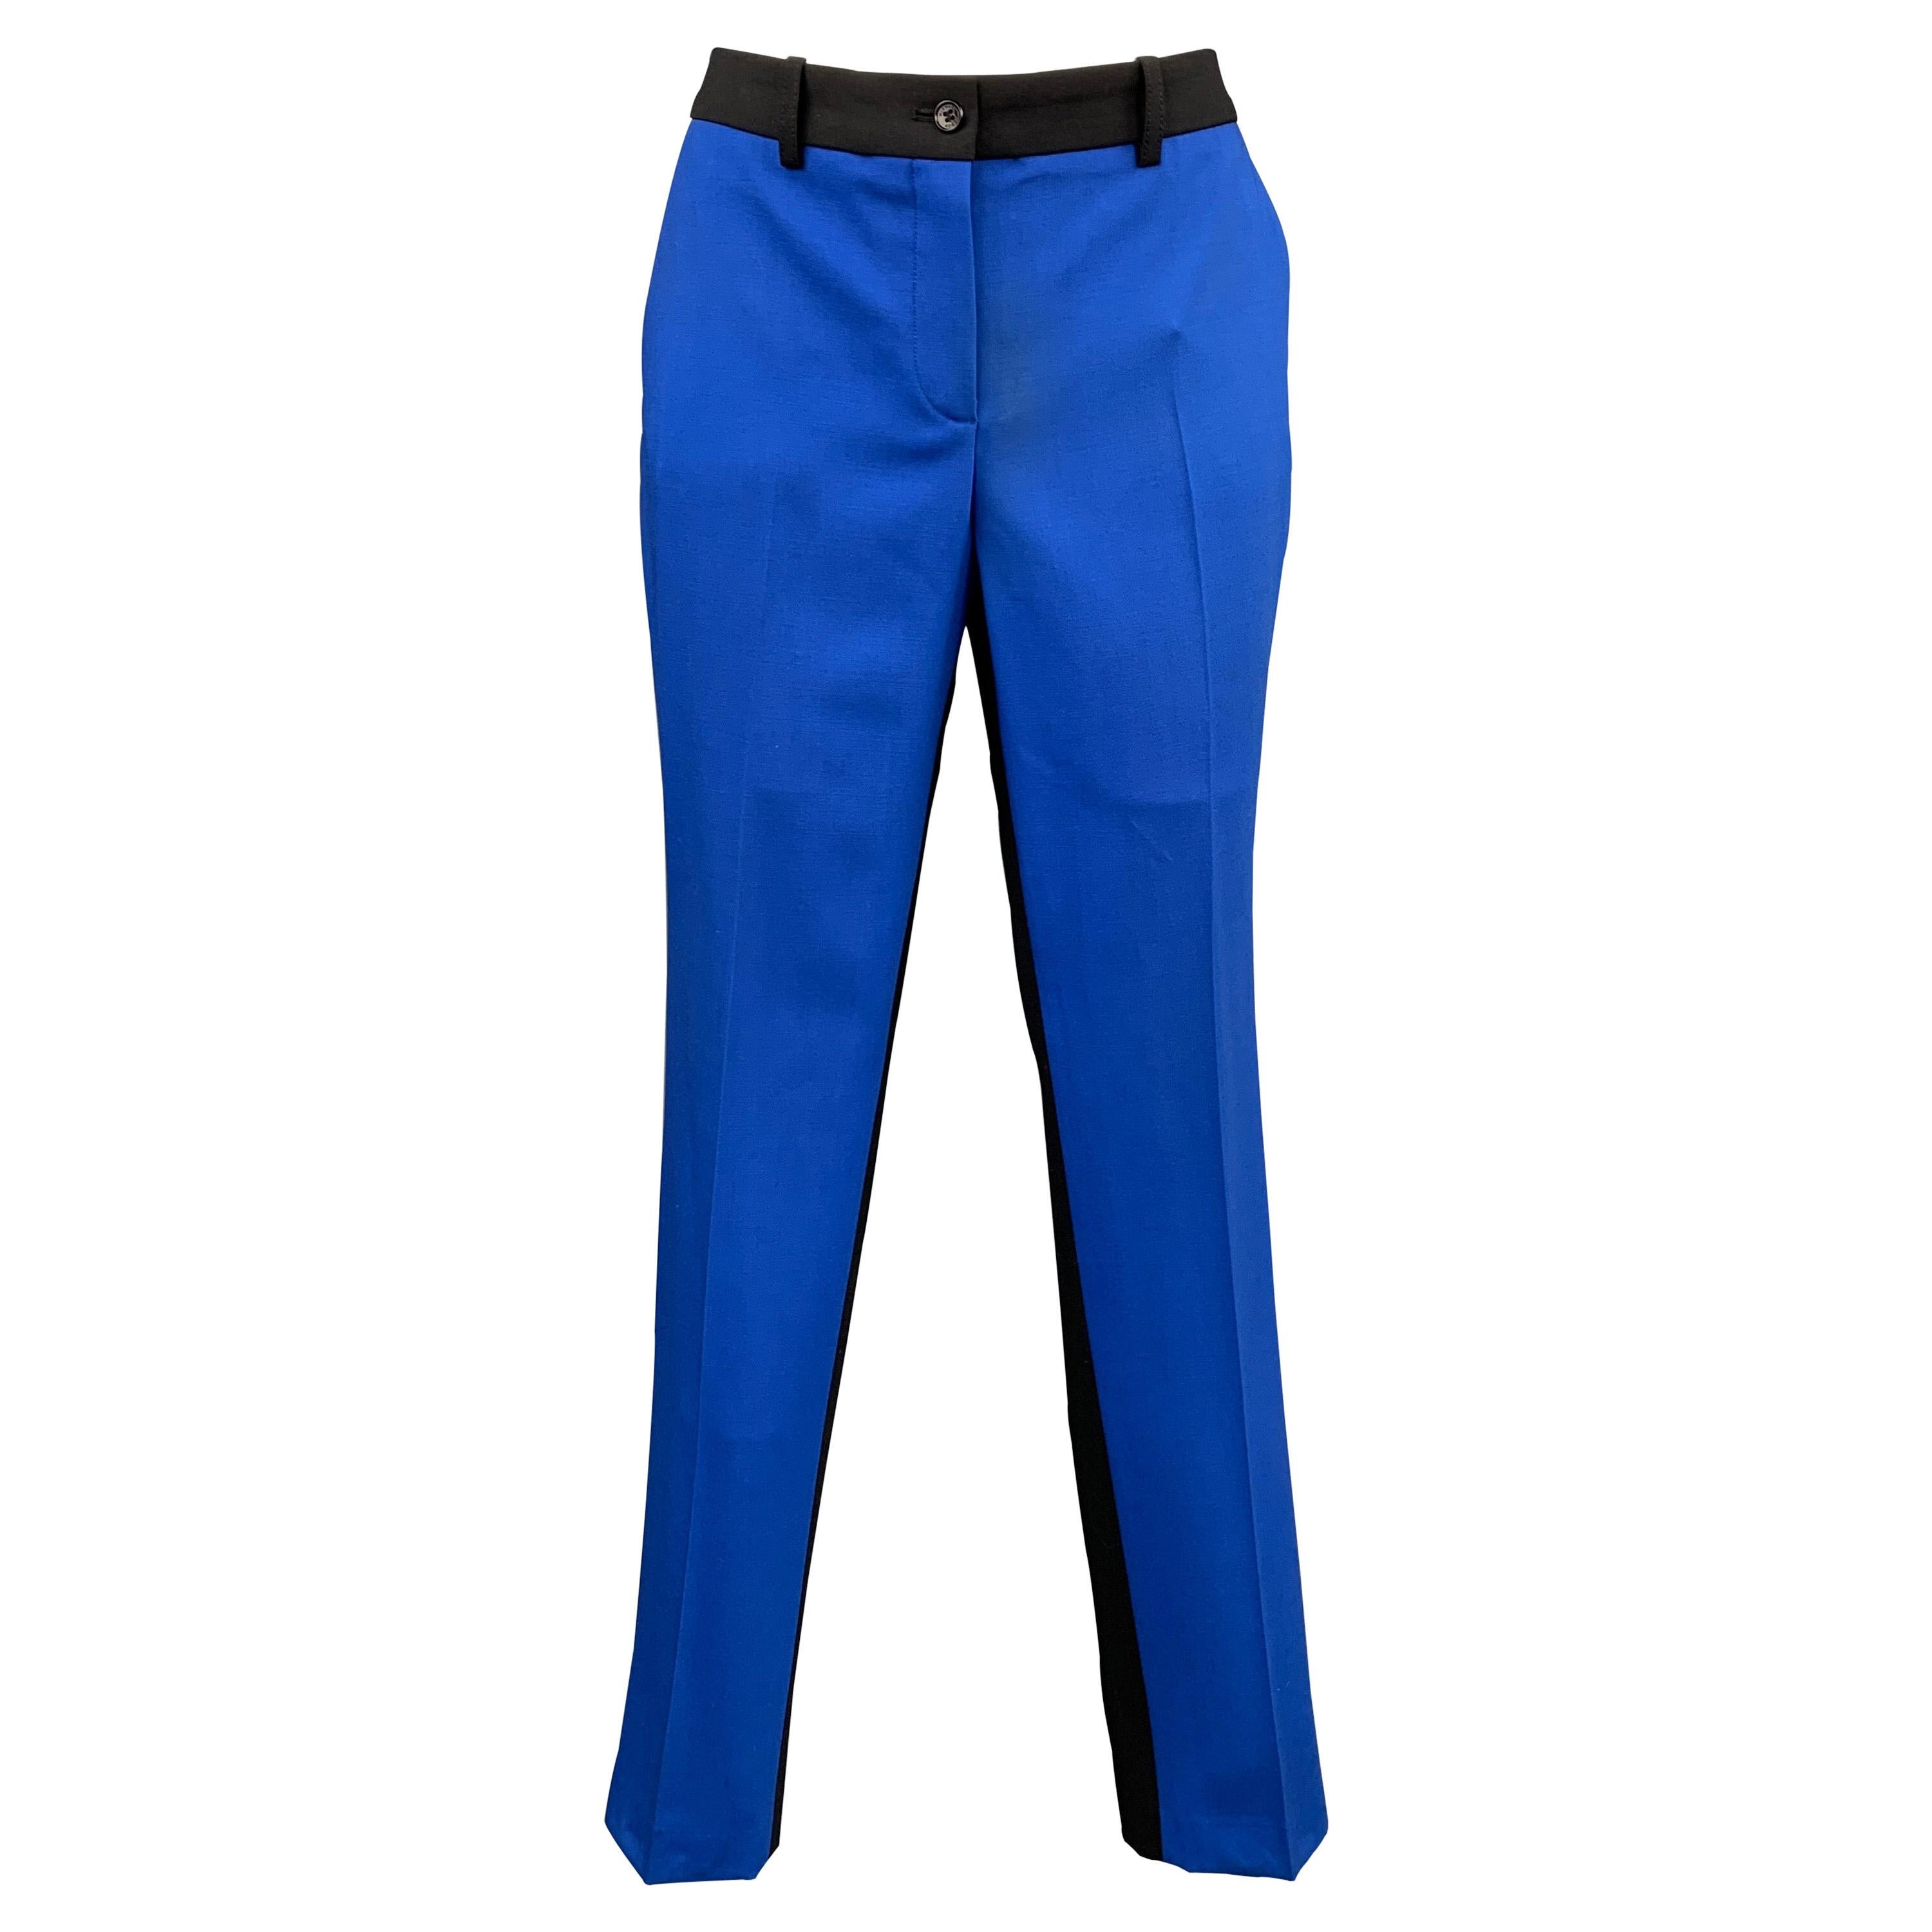 MICHAEL KORS Size 6 Black & Blue Color Block Virgin Wool Blend Dress Pants